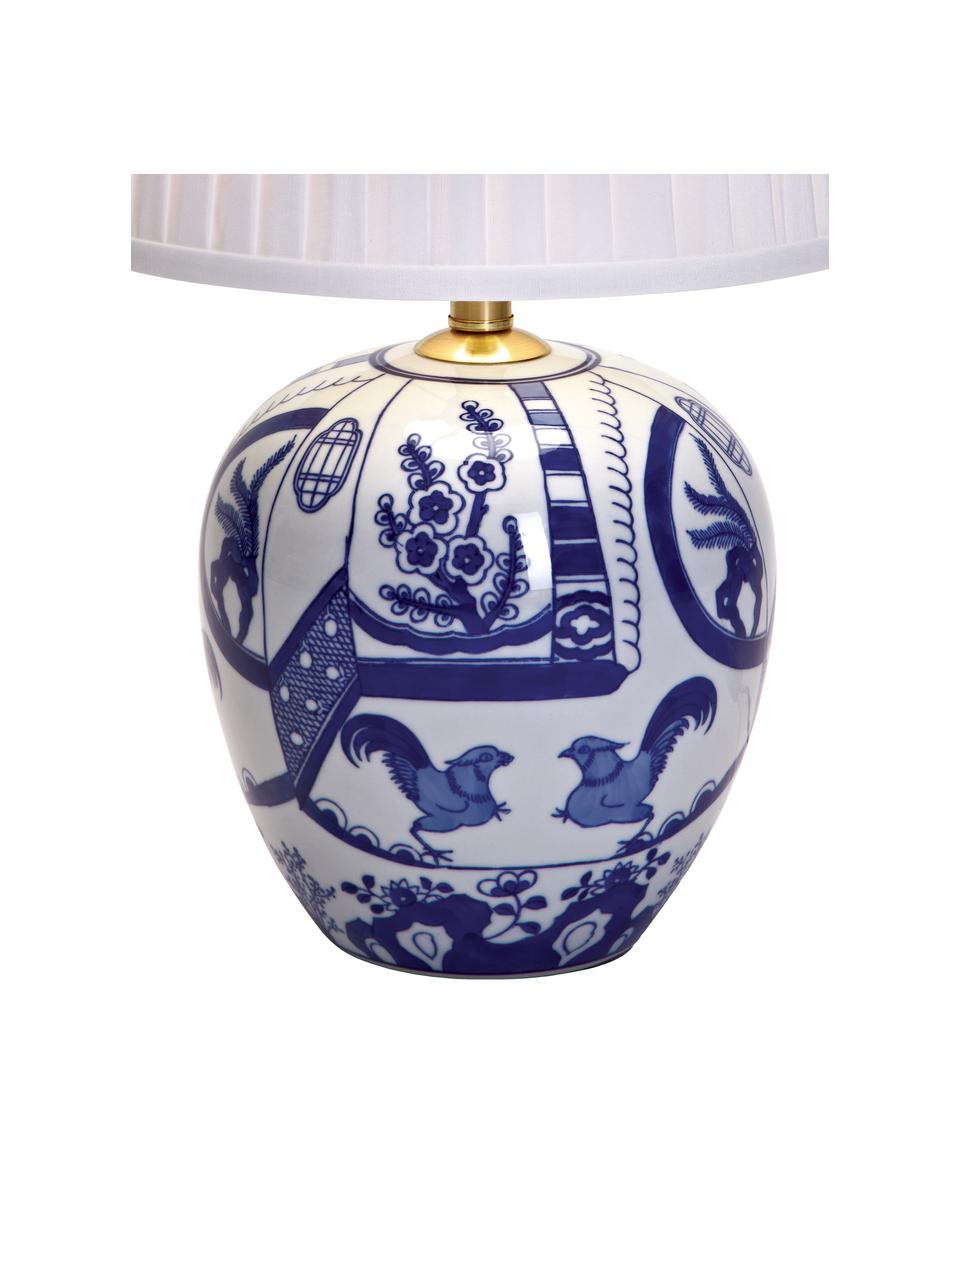 Keramická stolní lampa Göteborg, Podstava lampy: modrá, bílá Stínidlo: bílá, Ø 31 cm, V 48 cm